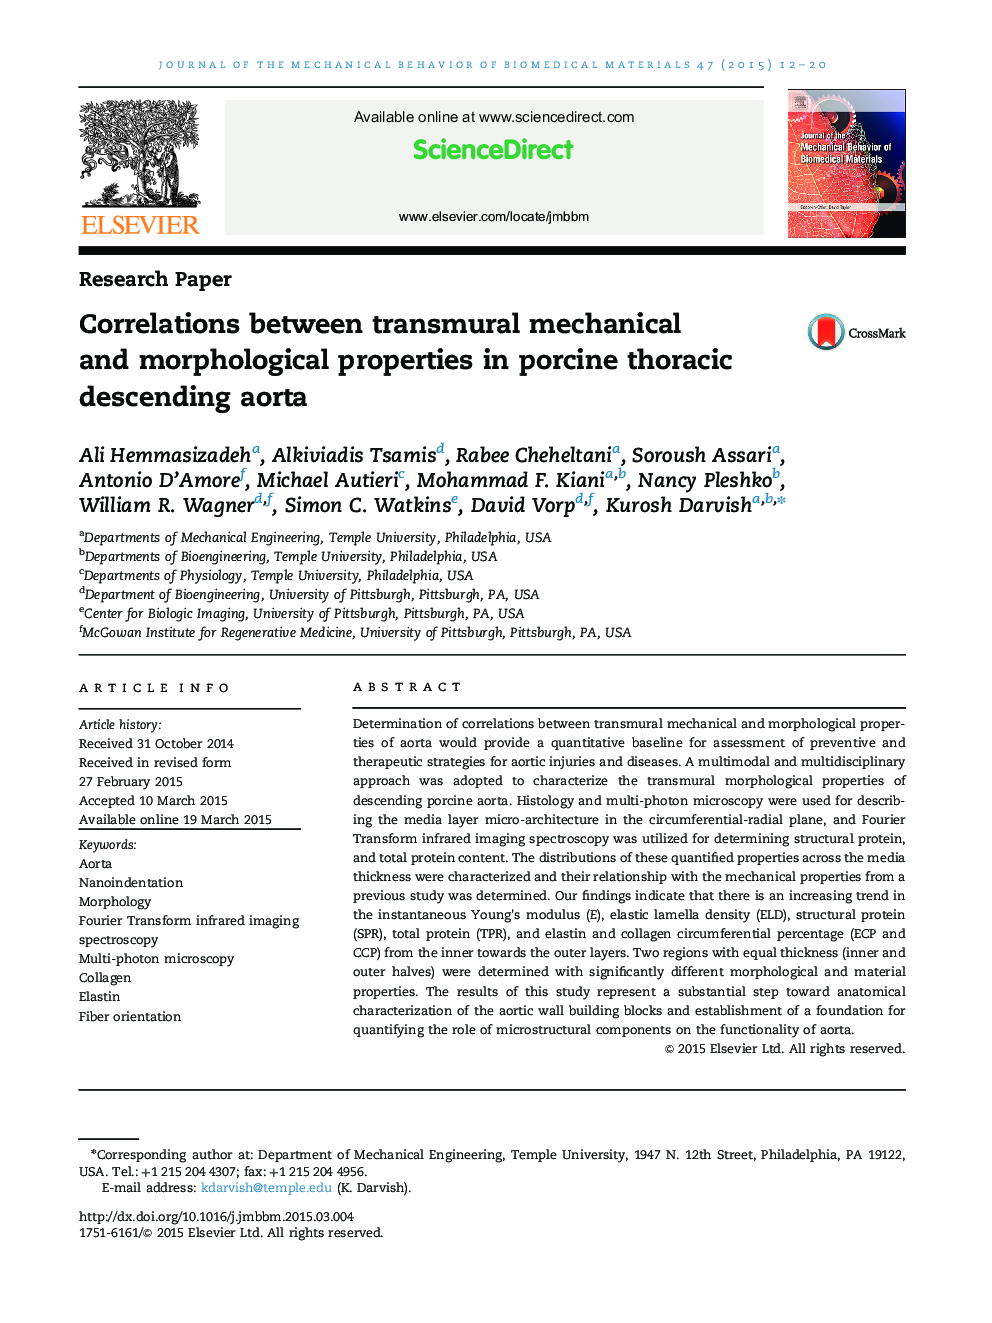 Correlations between transmural mechanical and morphological properties in porcine thoracic descending aorta